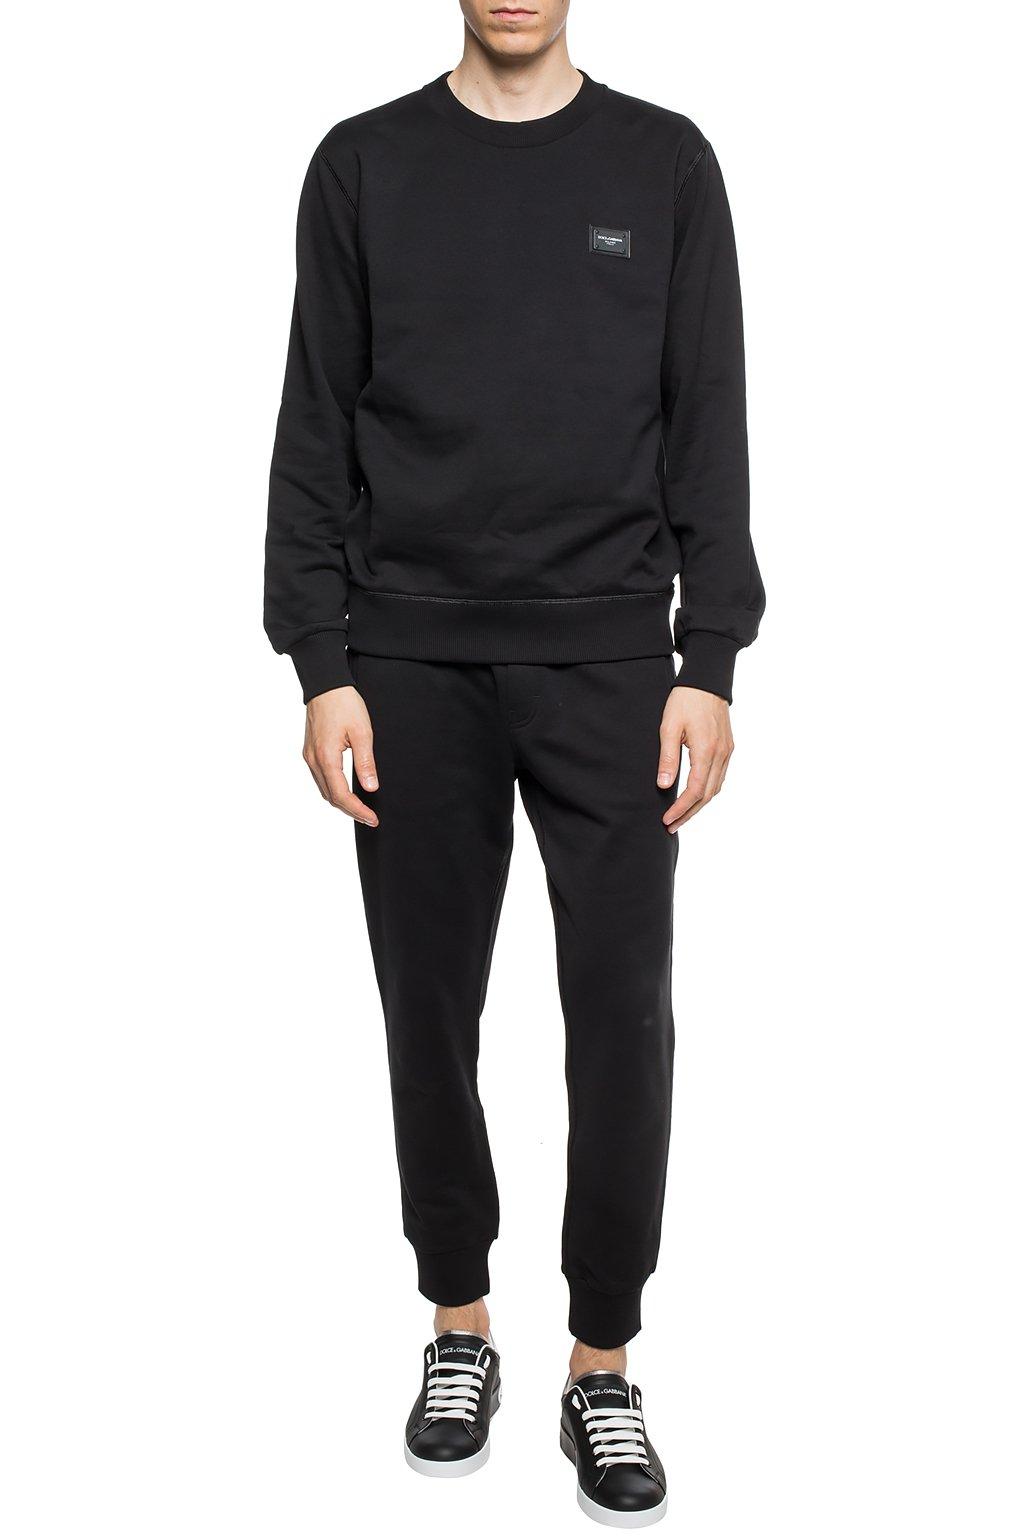 Dolce & Gabbana Branded Sweatpants in Black for Men - Lyst